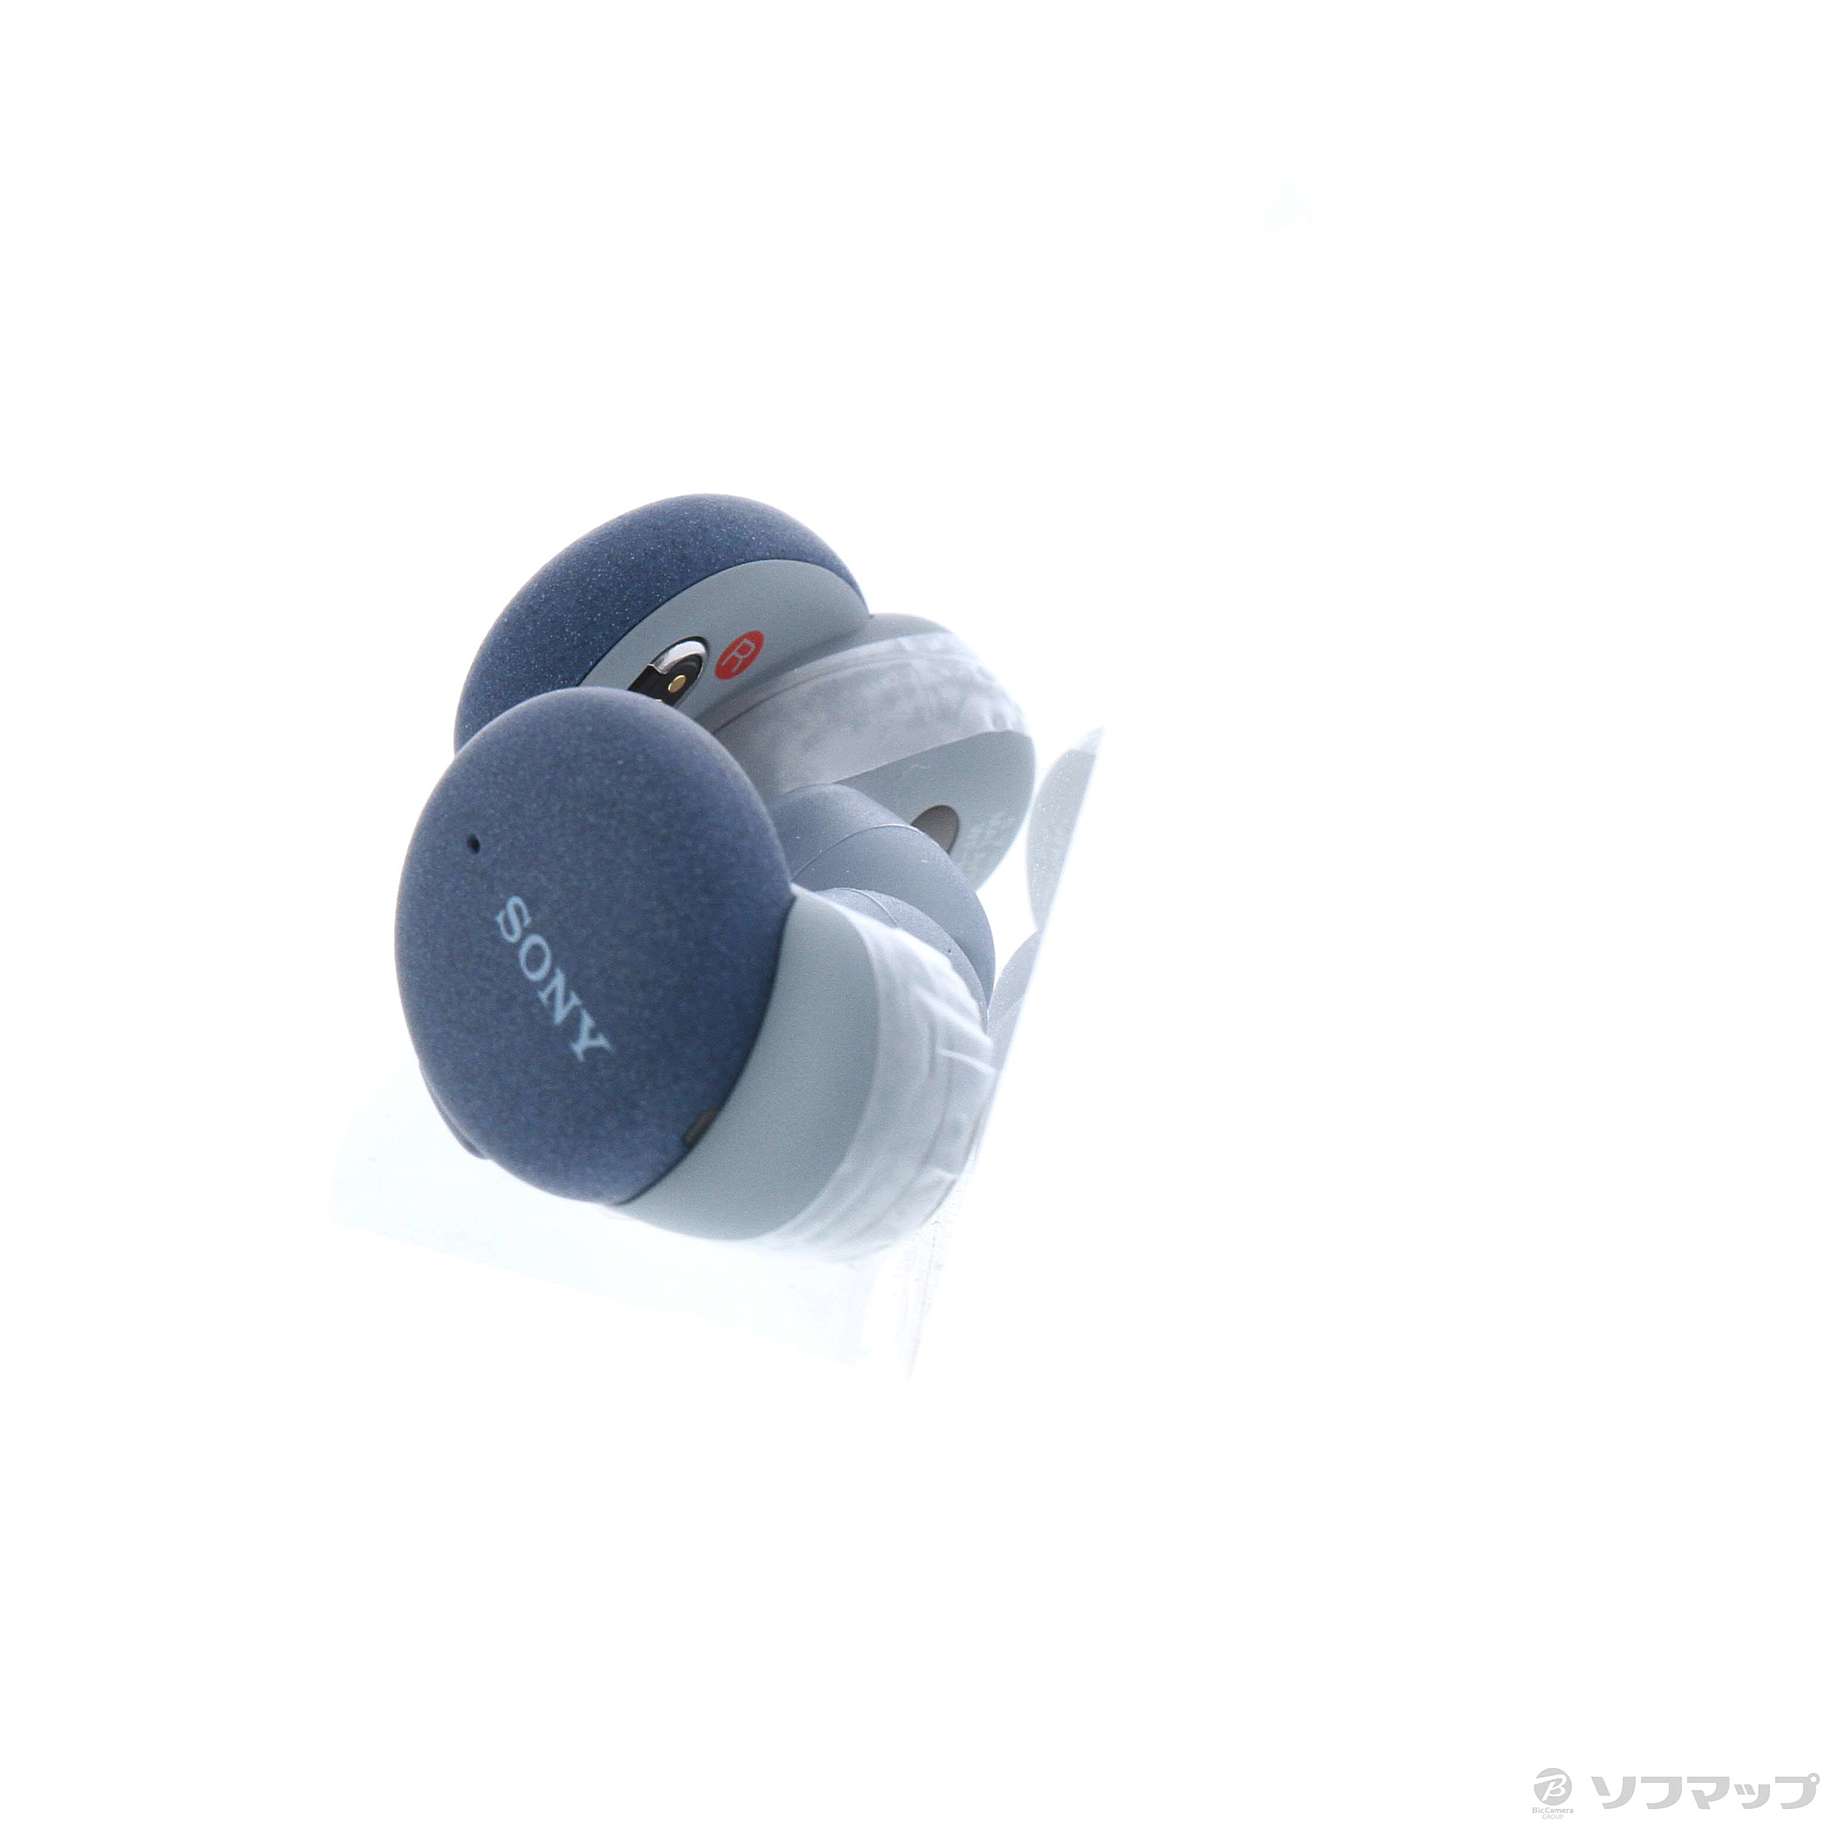 WF-H800 h.ear in 3 Truly Wireless Headphones ブルー 海外仕様